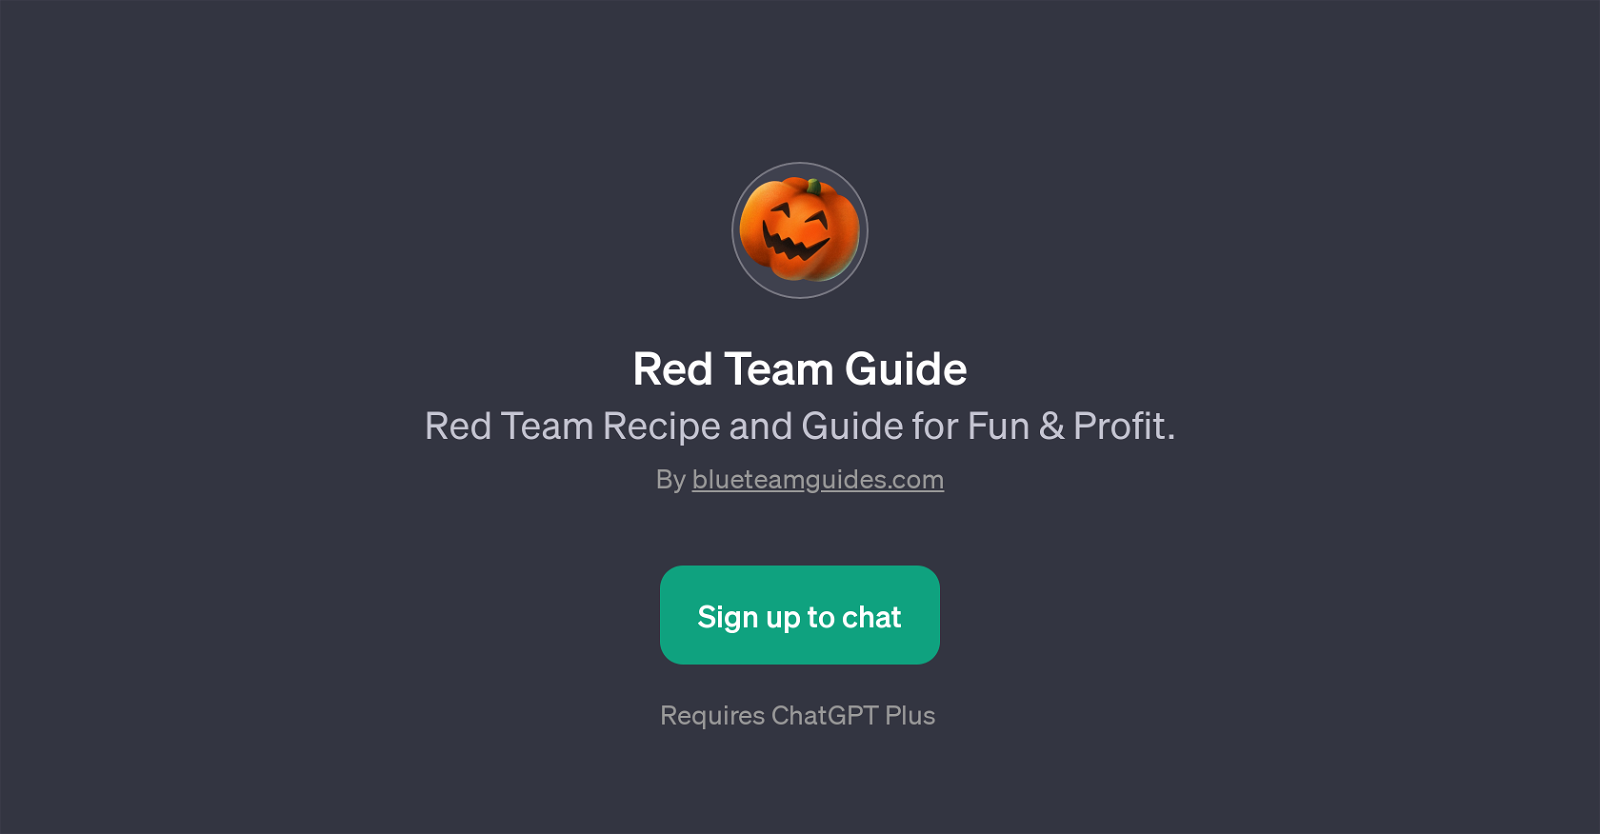 Red Team Guide website